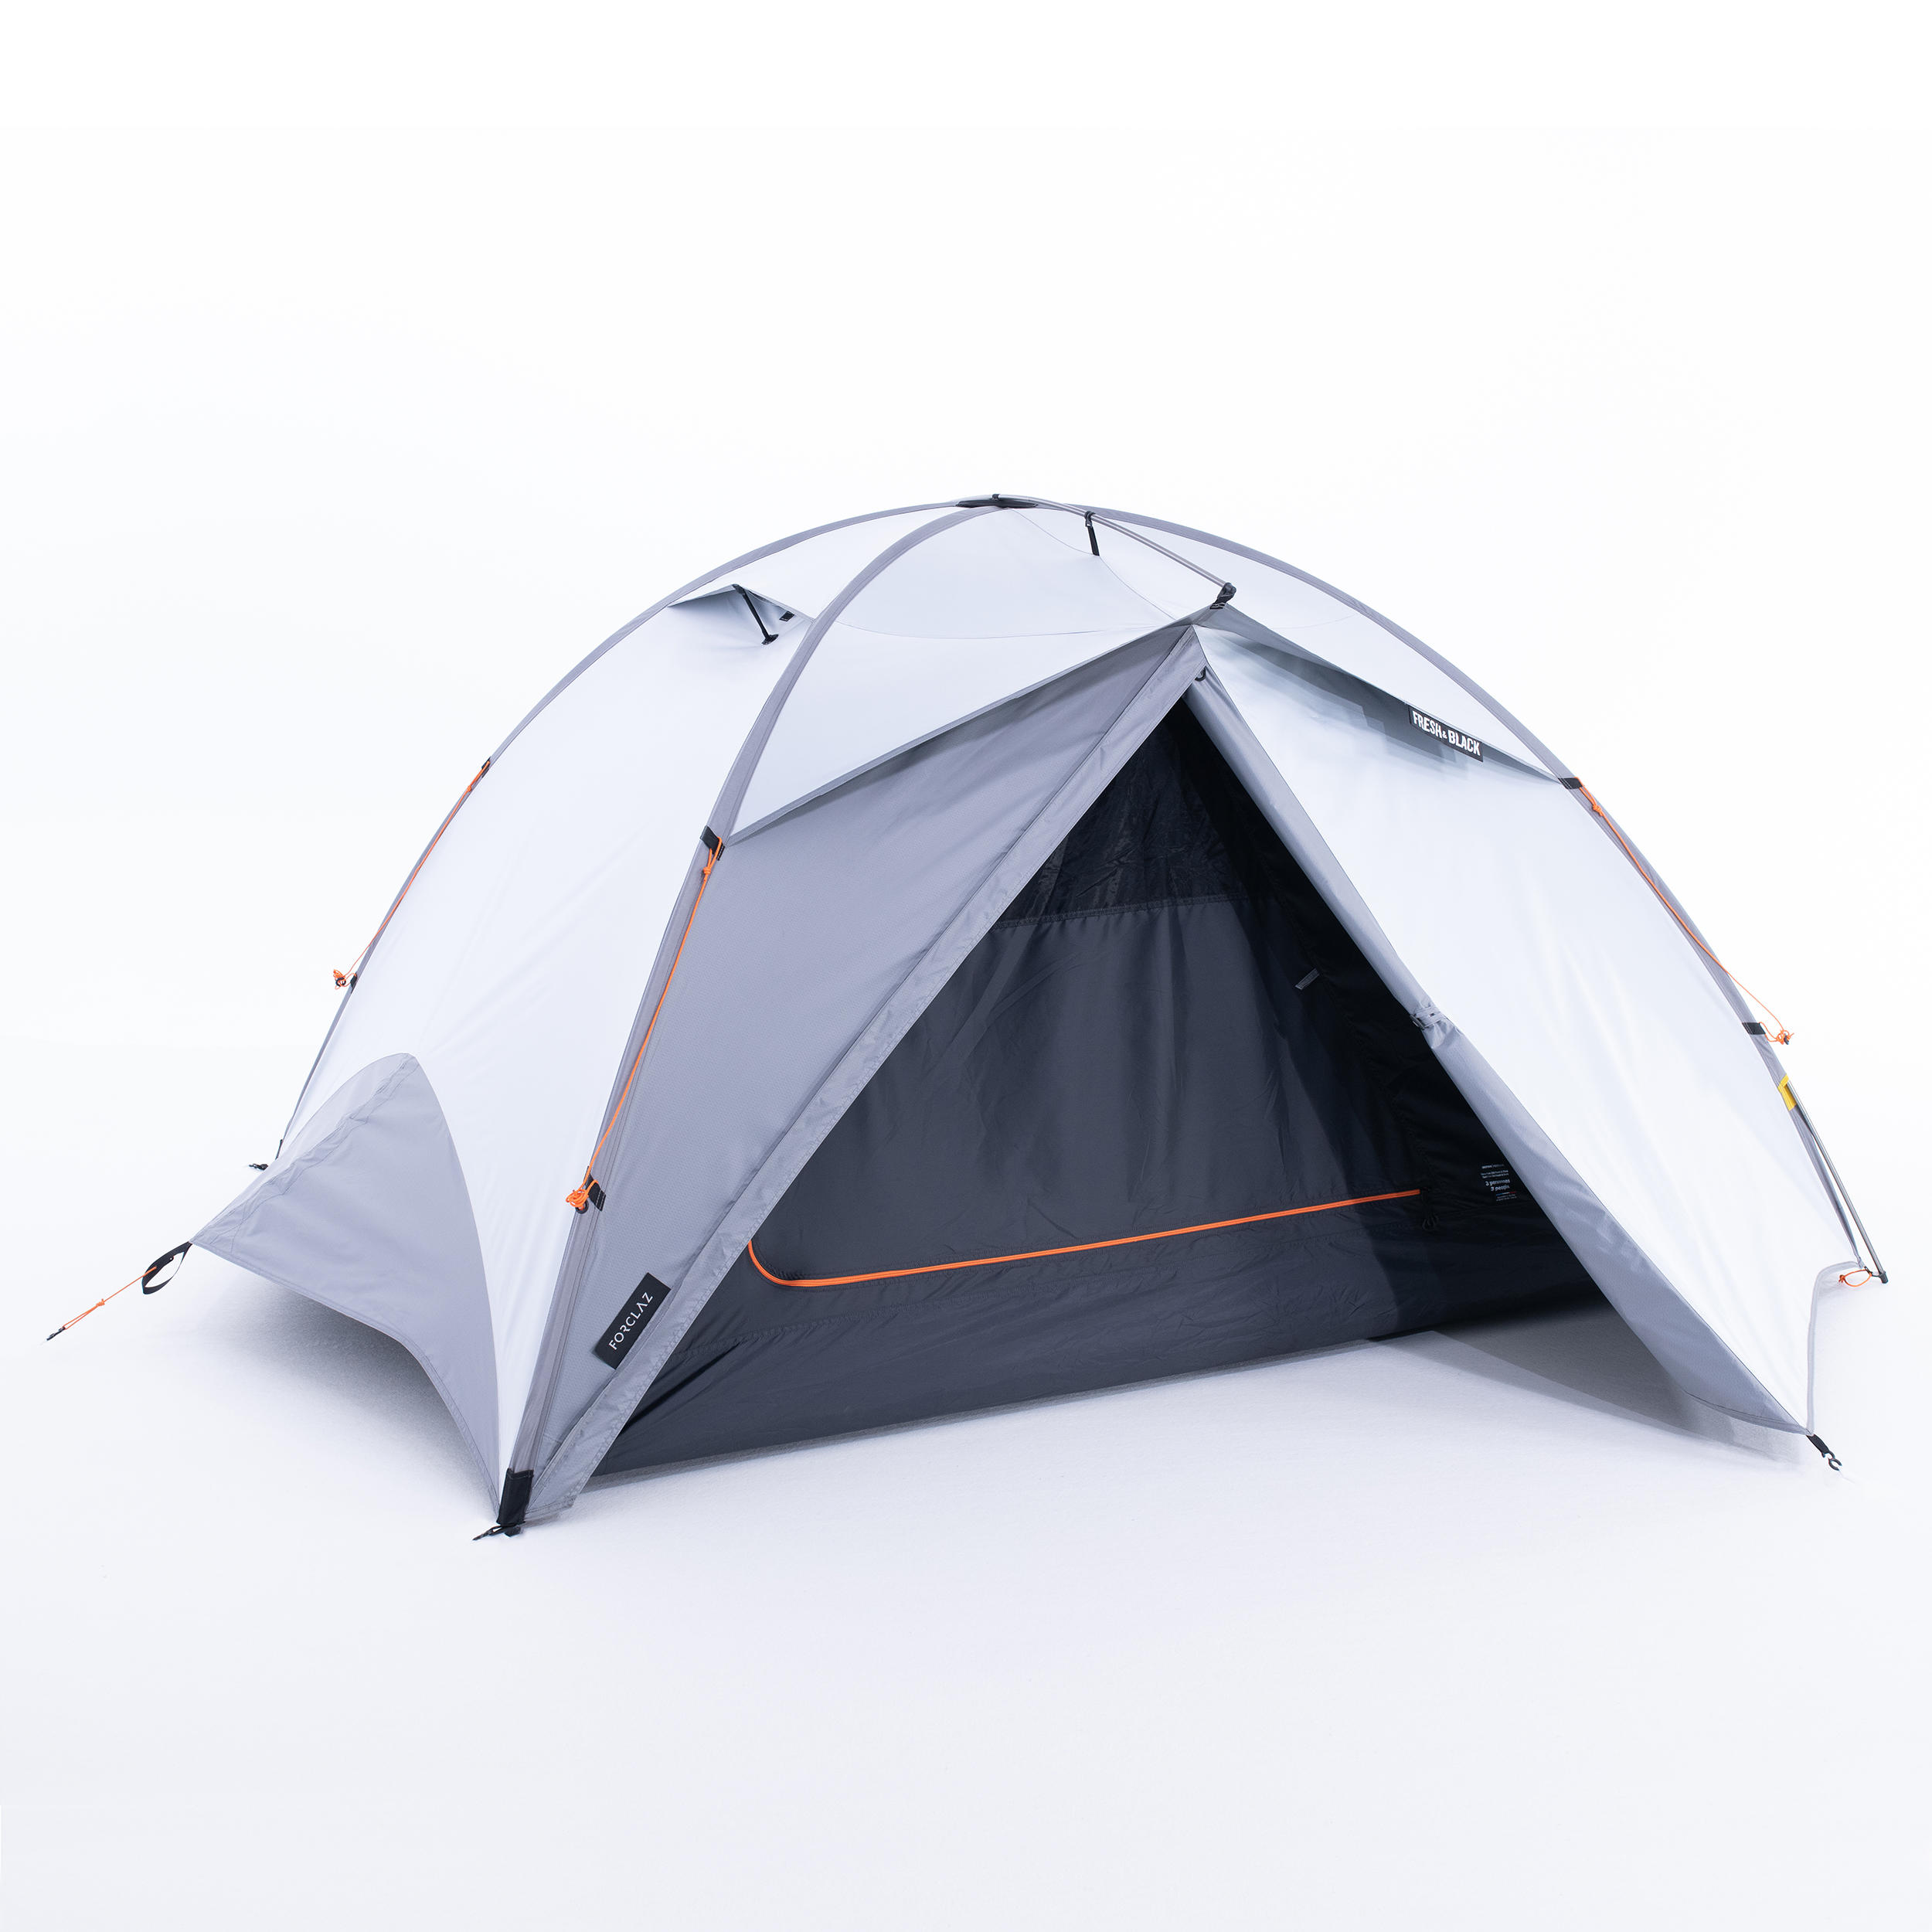 decathlon tents uk